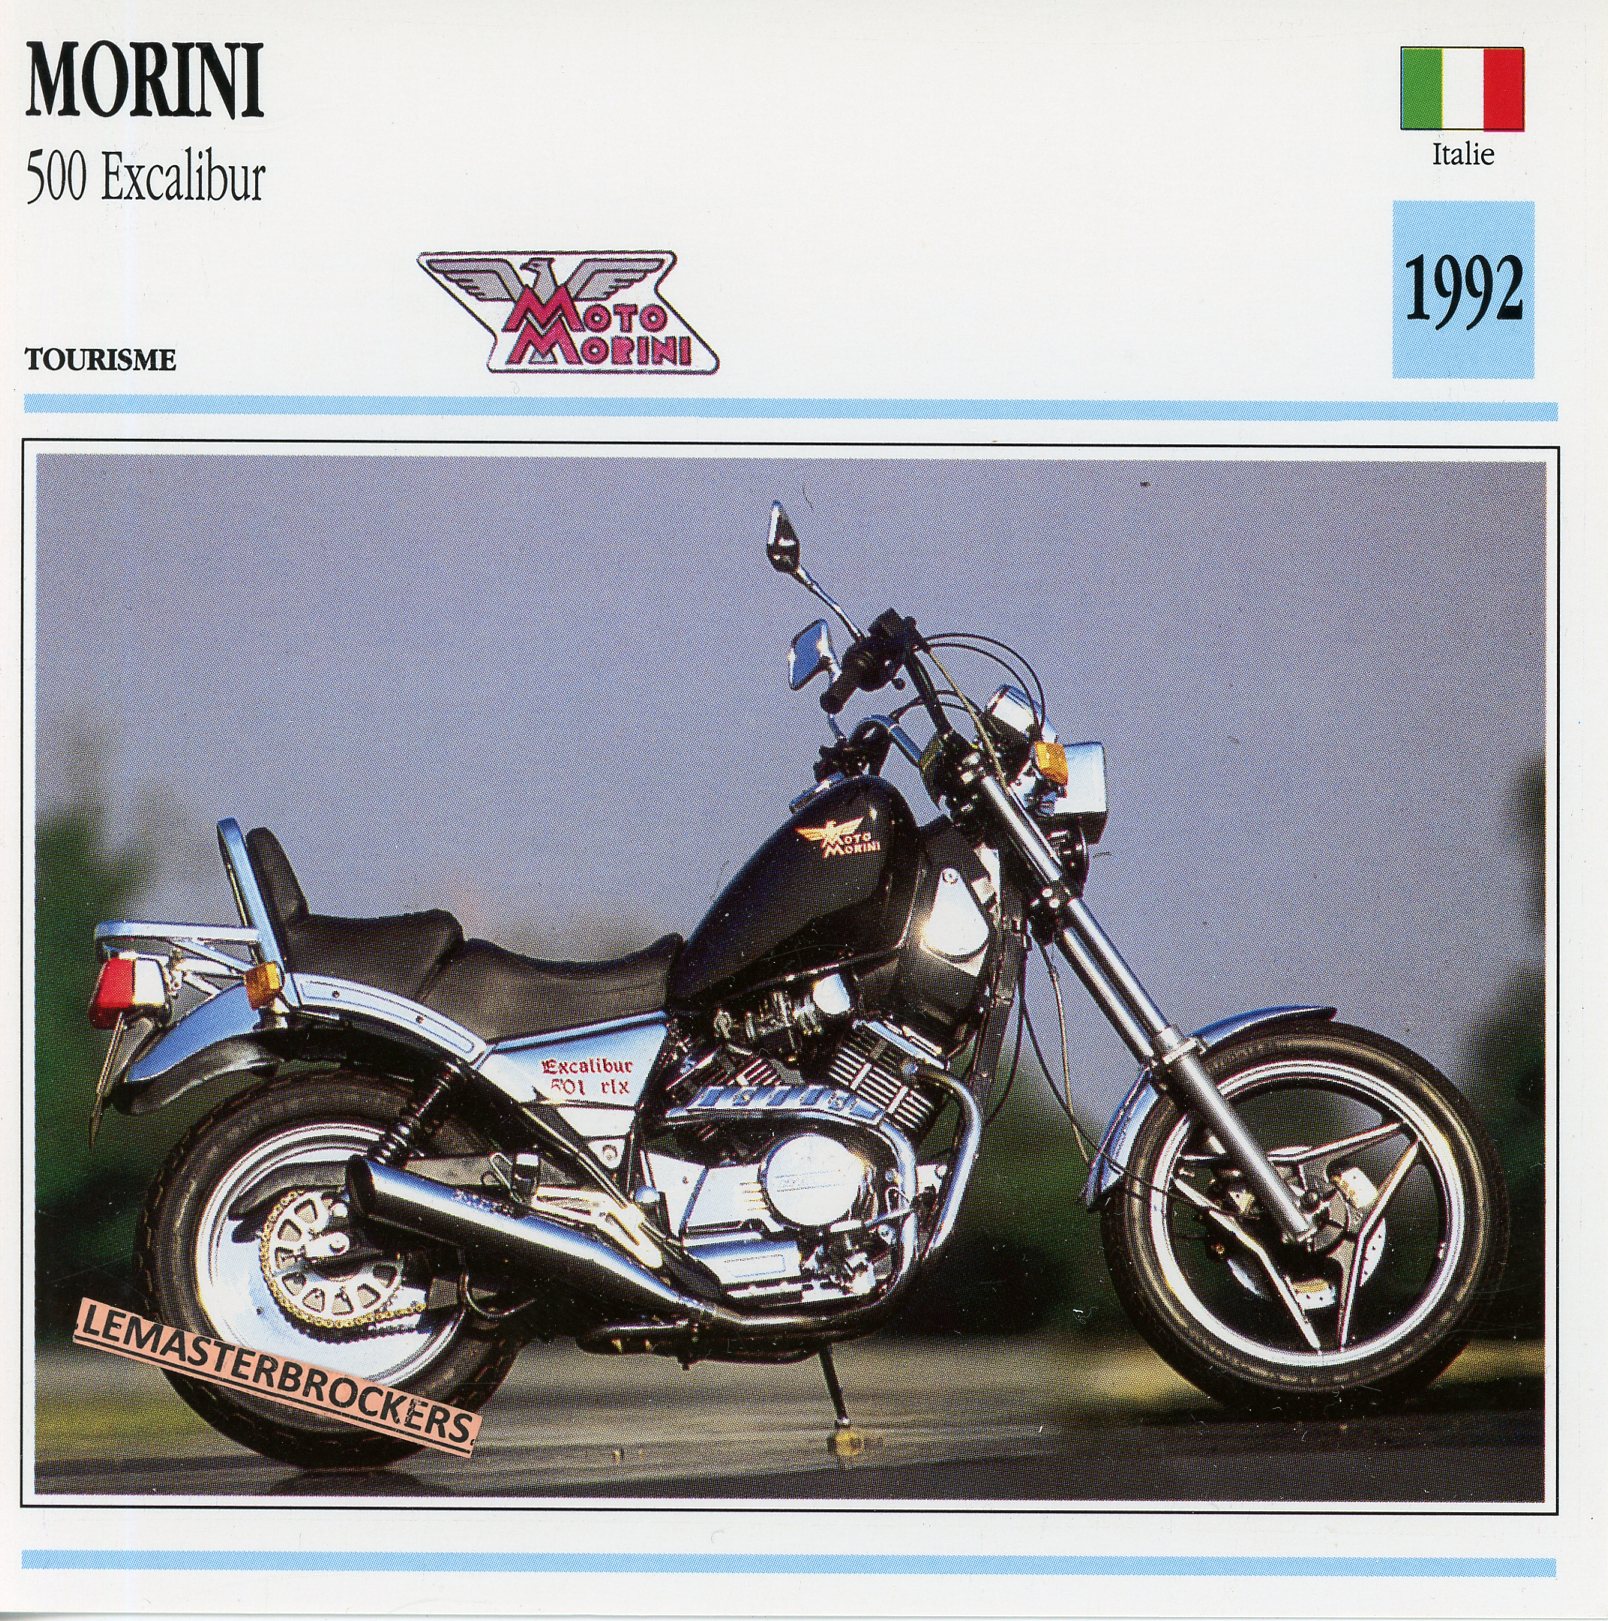 MORINI-500-EXCALIBUR-1992-LEMASTERBROCKERS-FICHE-MOTO-ATLAS-CARD